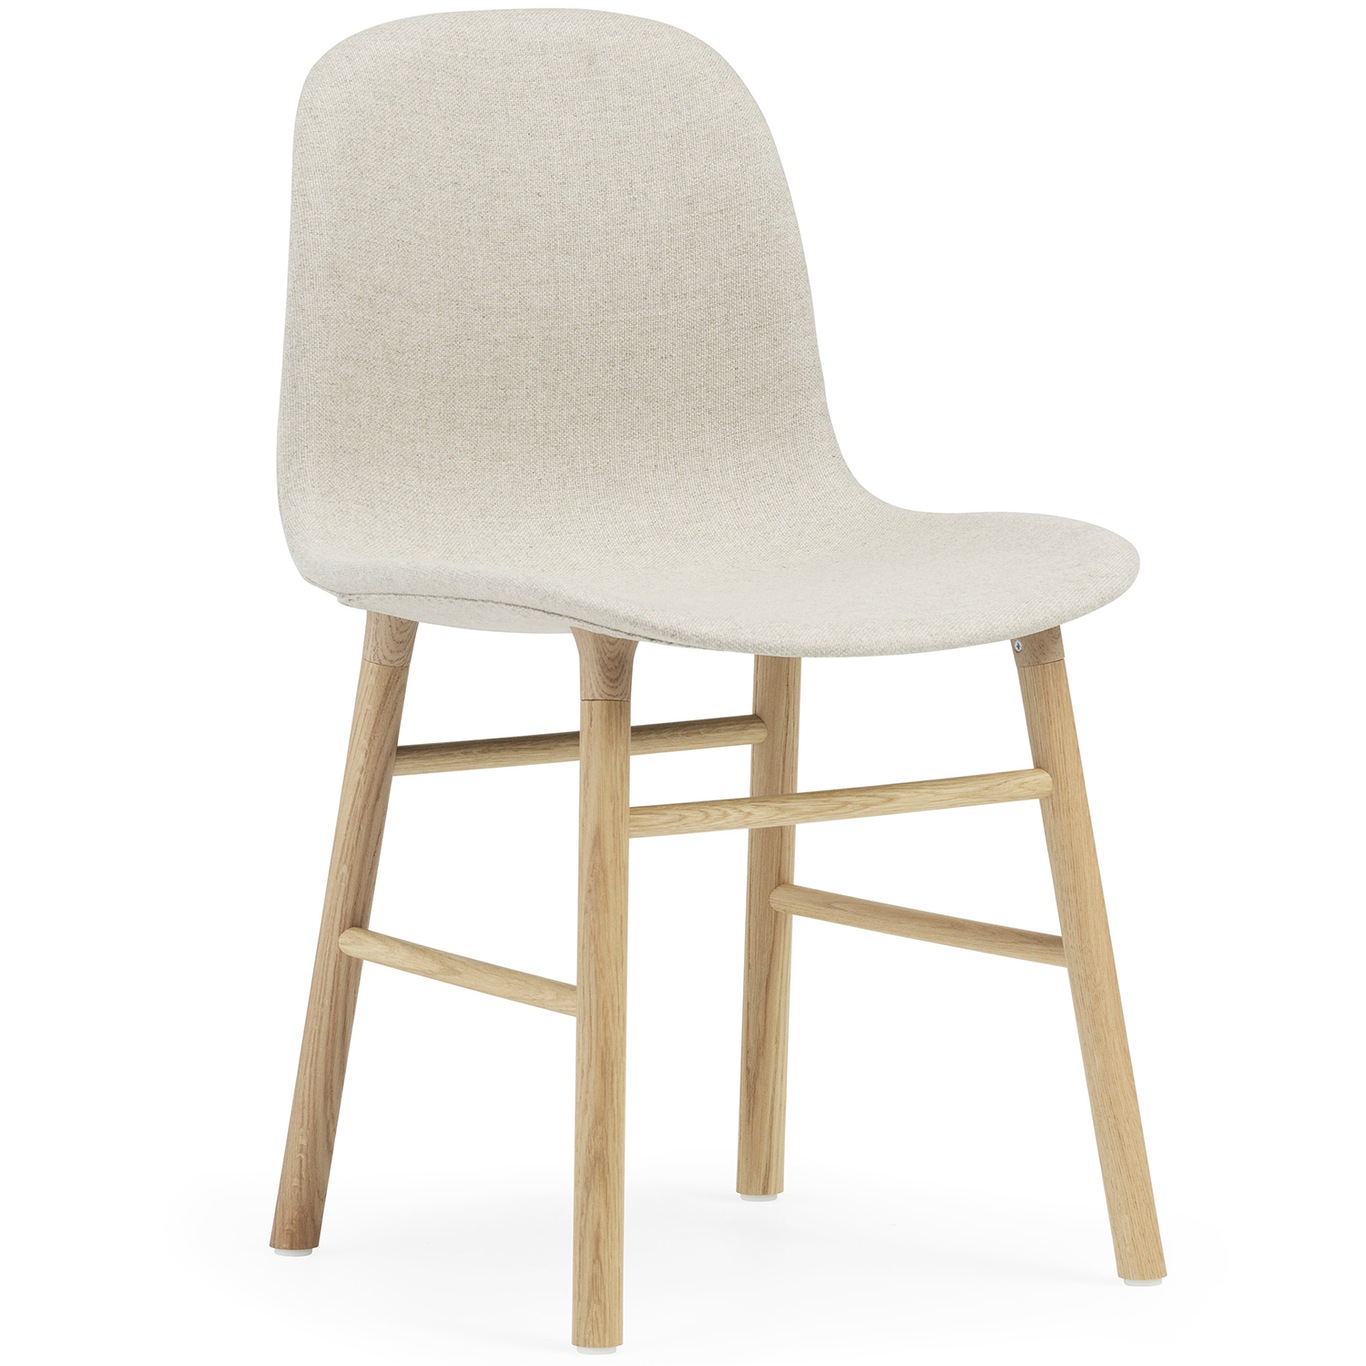 Form Chair Oak Frame, Main Line flax